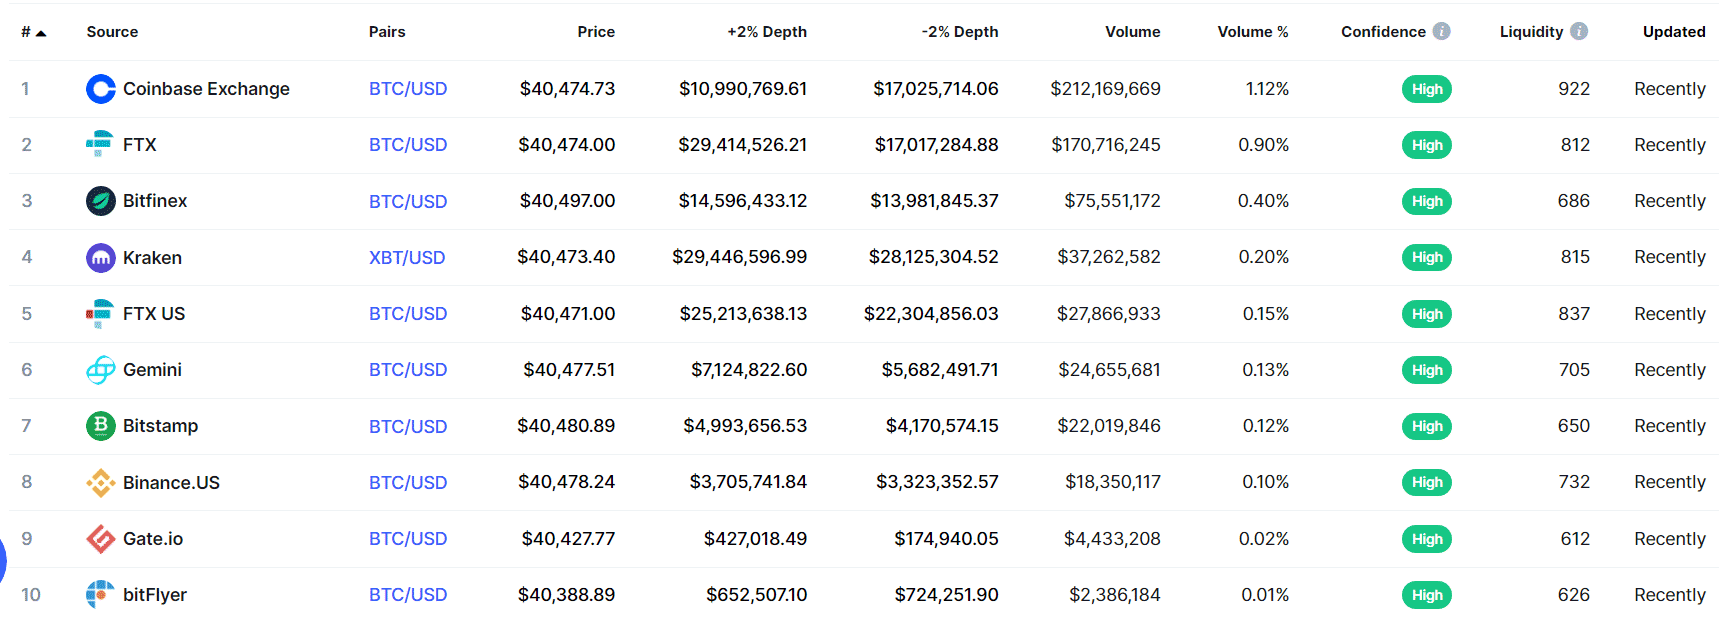 Bitcoin pricing